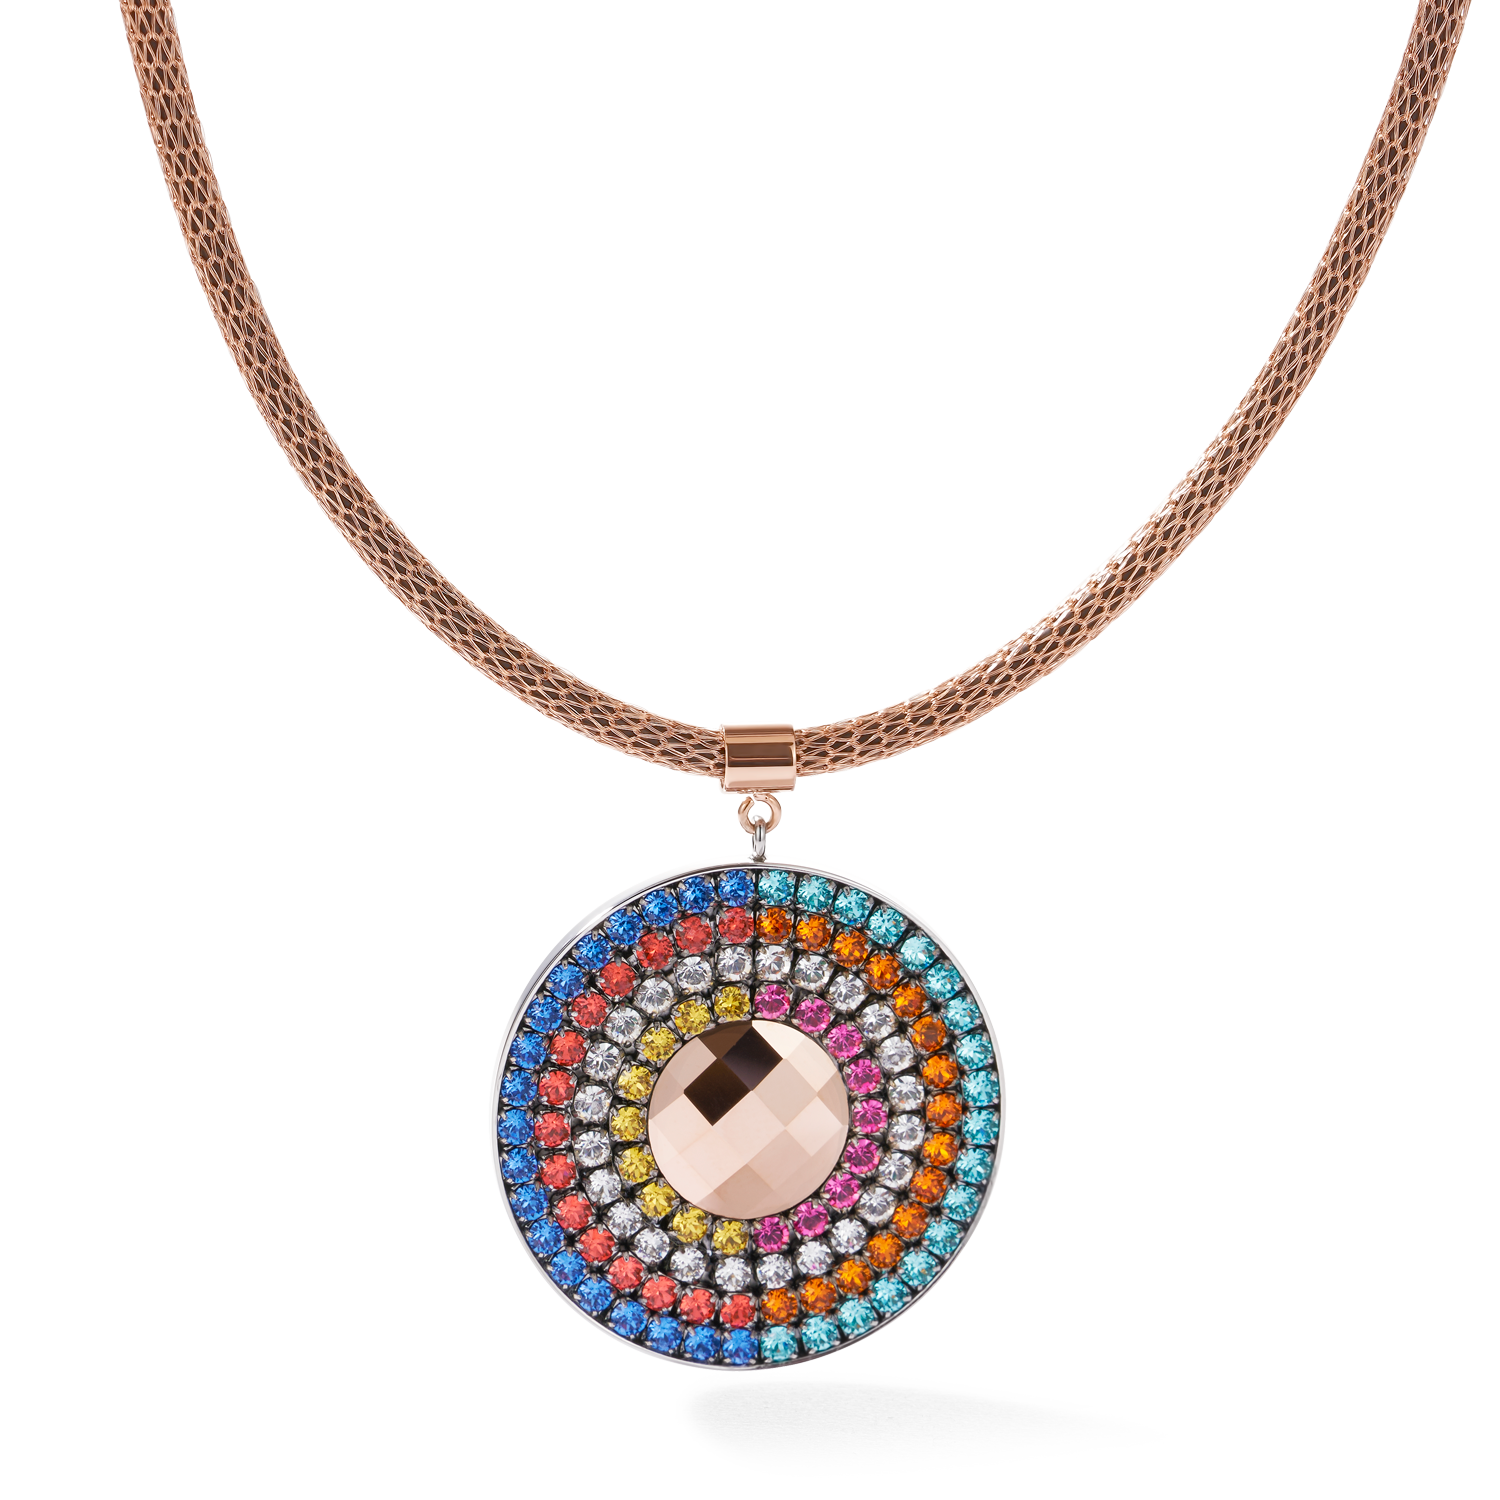 Halskette Amulett small Kristalle & Mesh multicolor